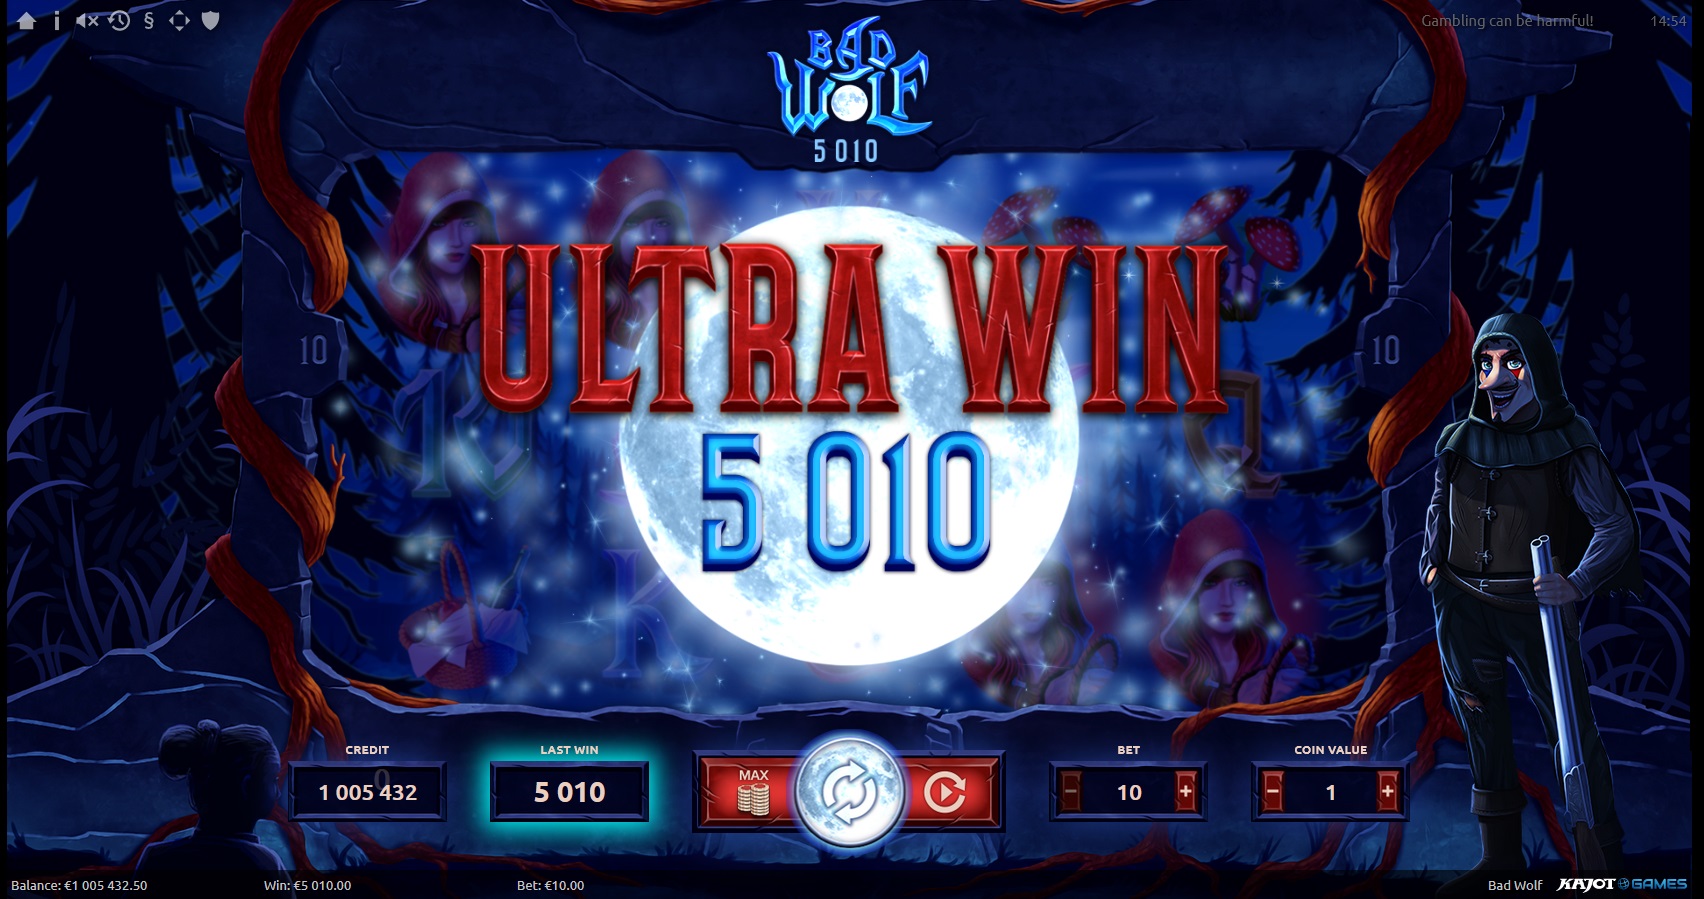 BAD WOLF ultra win B